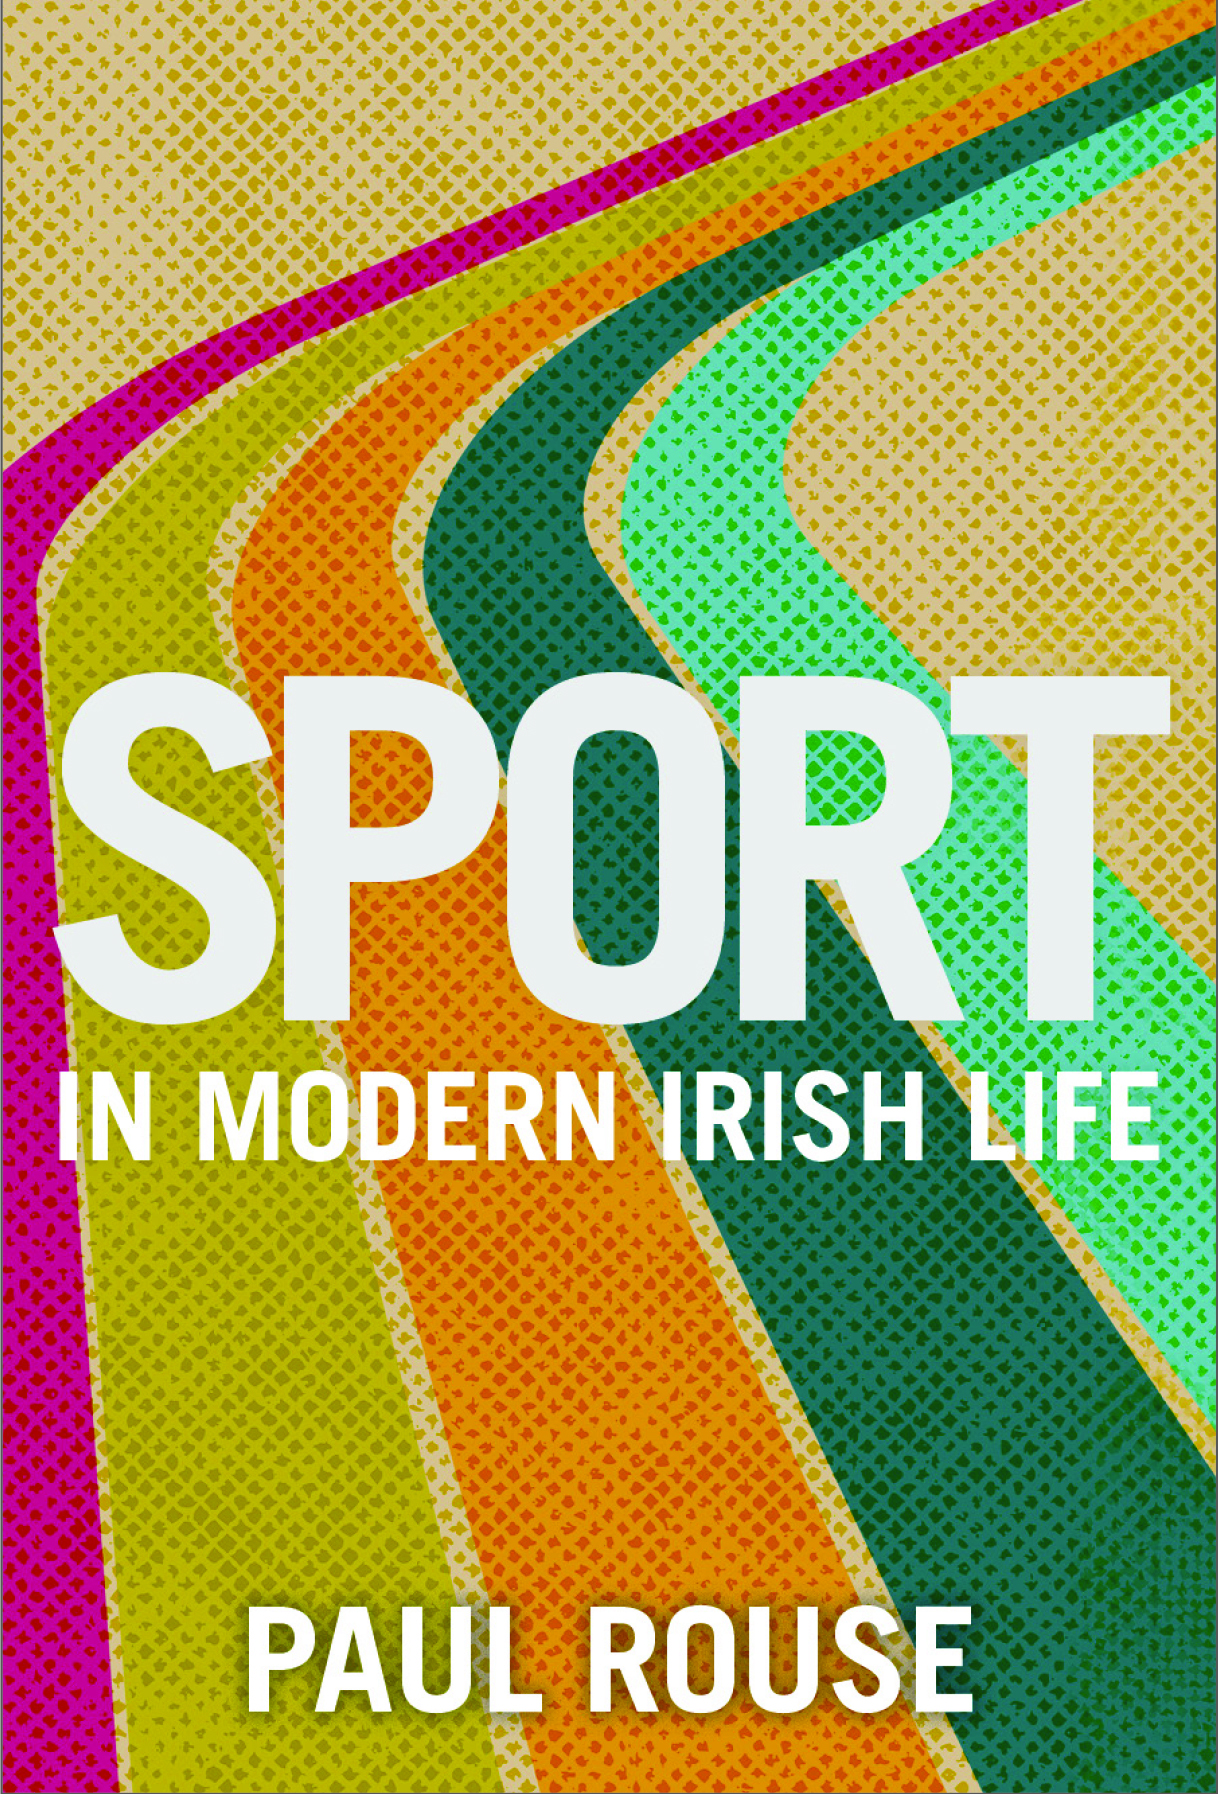 Sport in Modern Irish Life by Paul Rouse